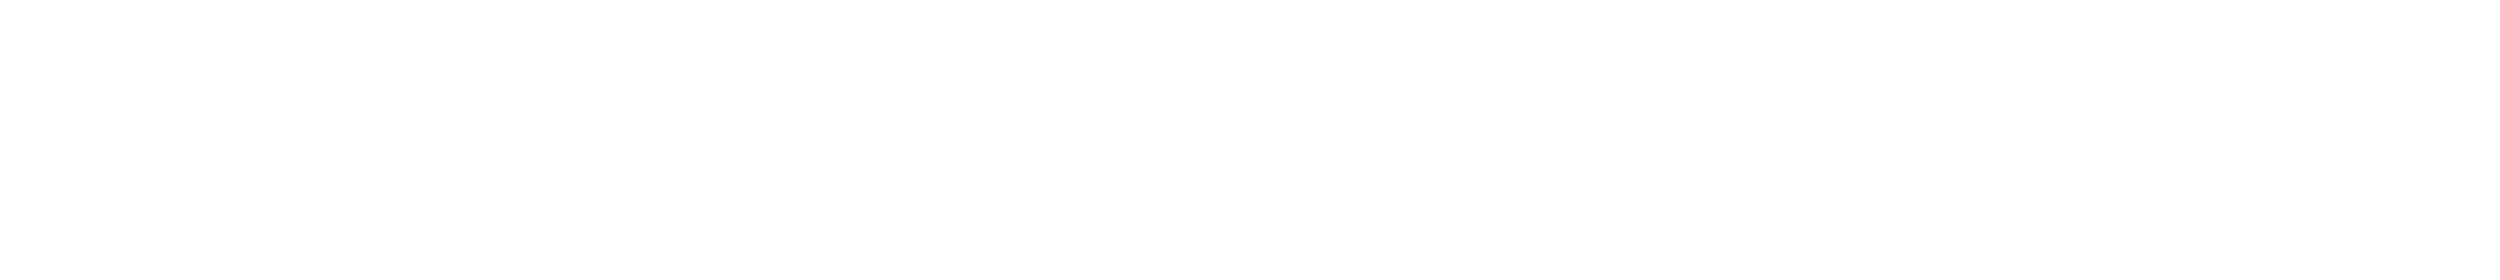 Fony-audio.com